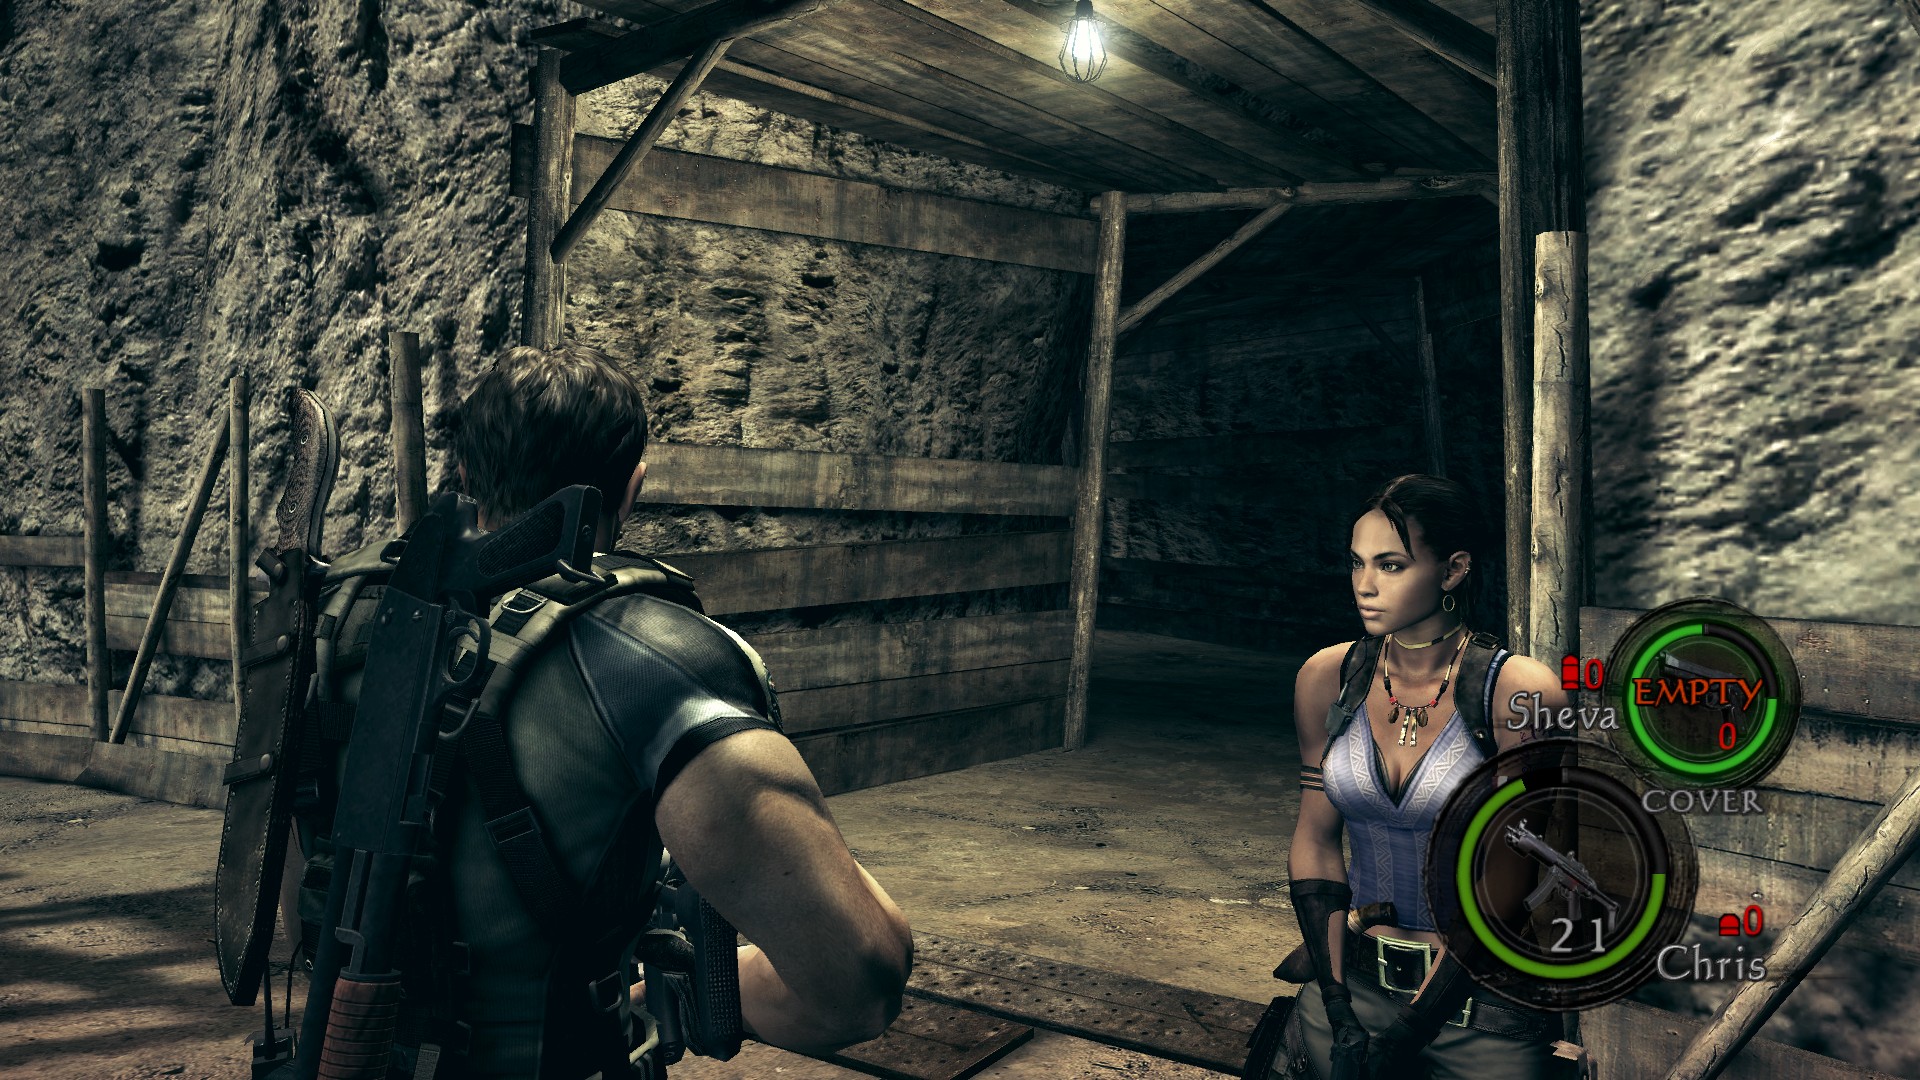 Resident Evil 5 [STEAM] Активация